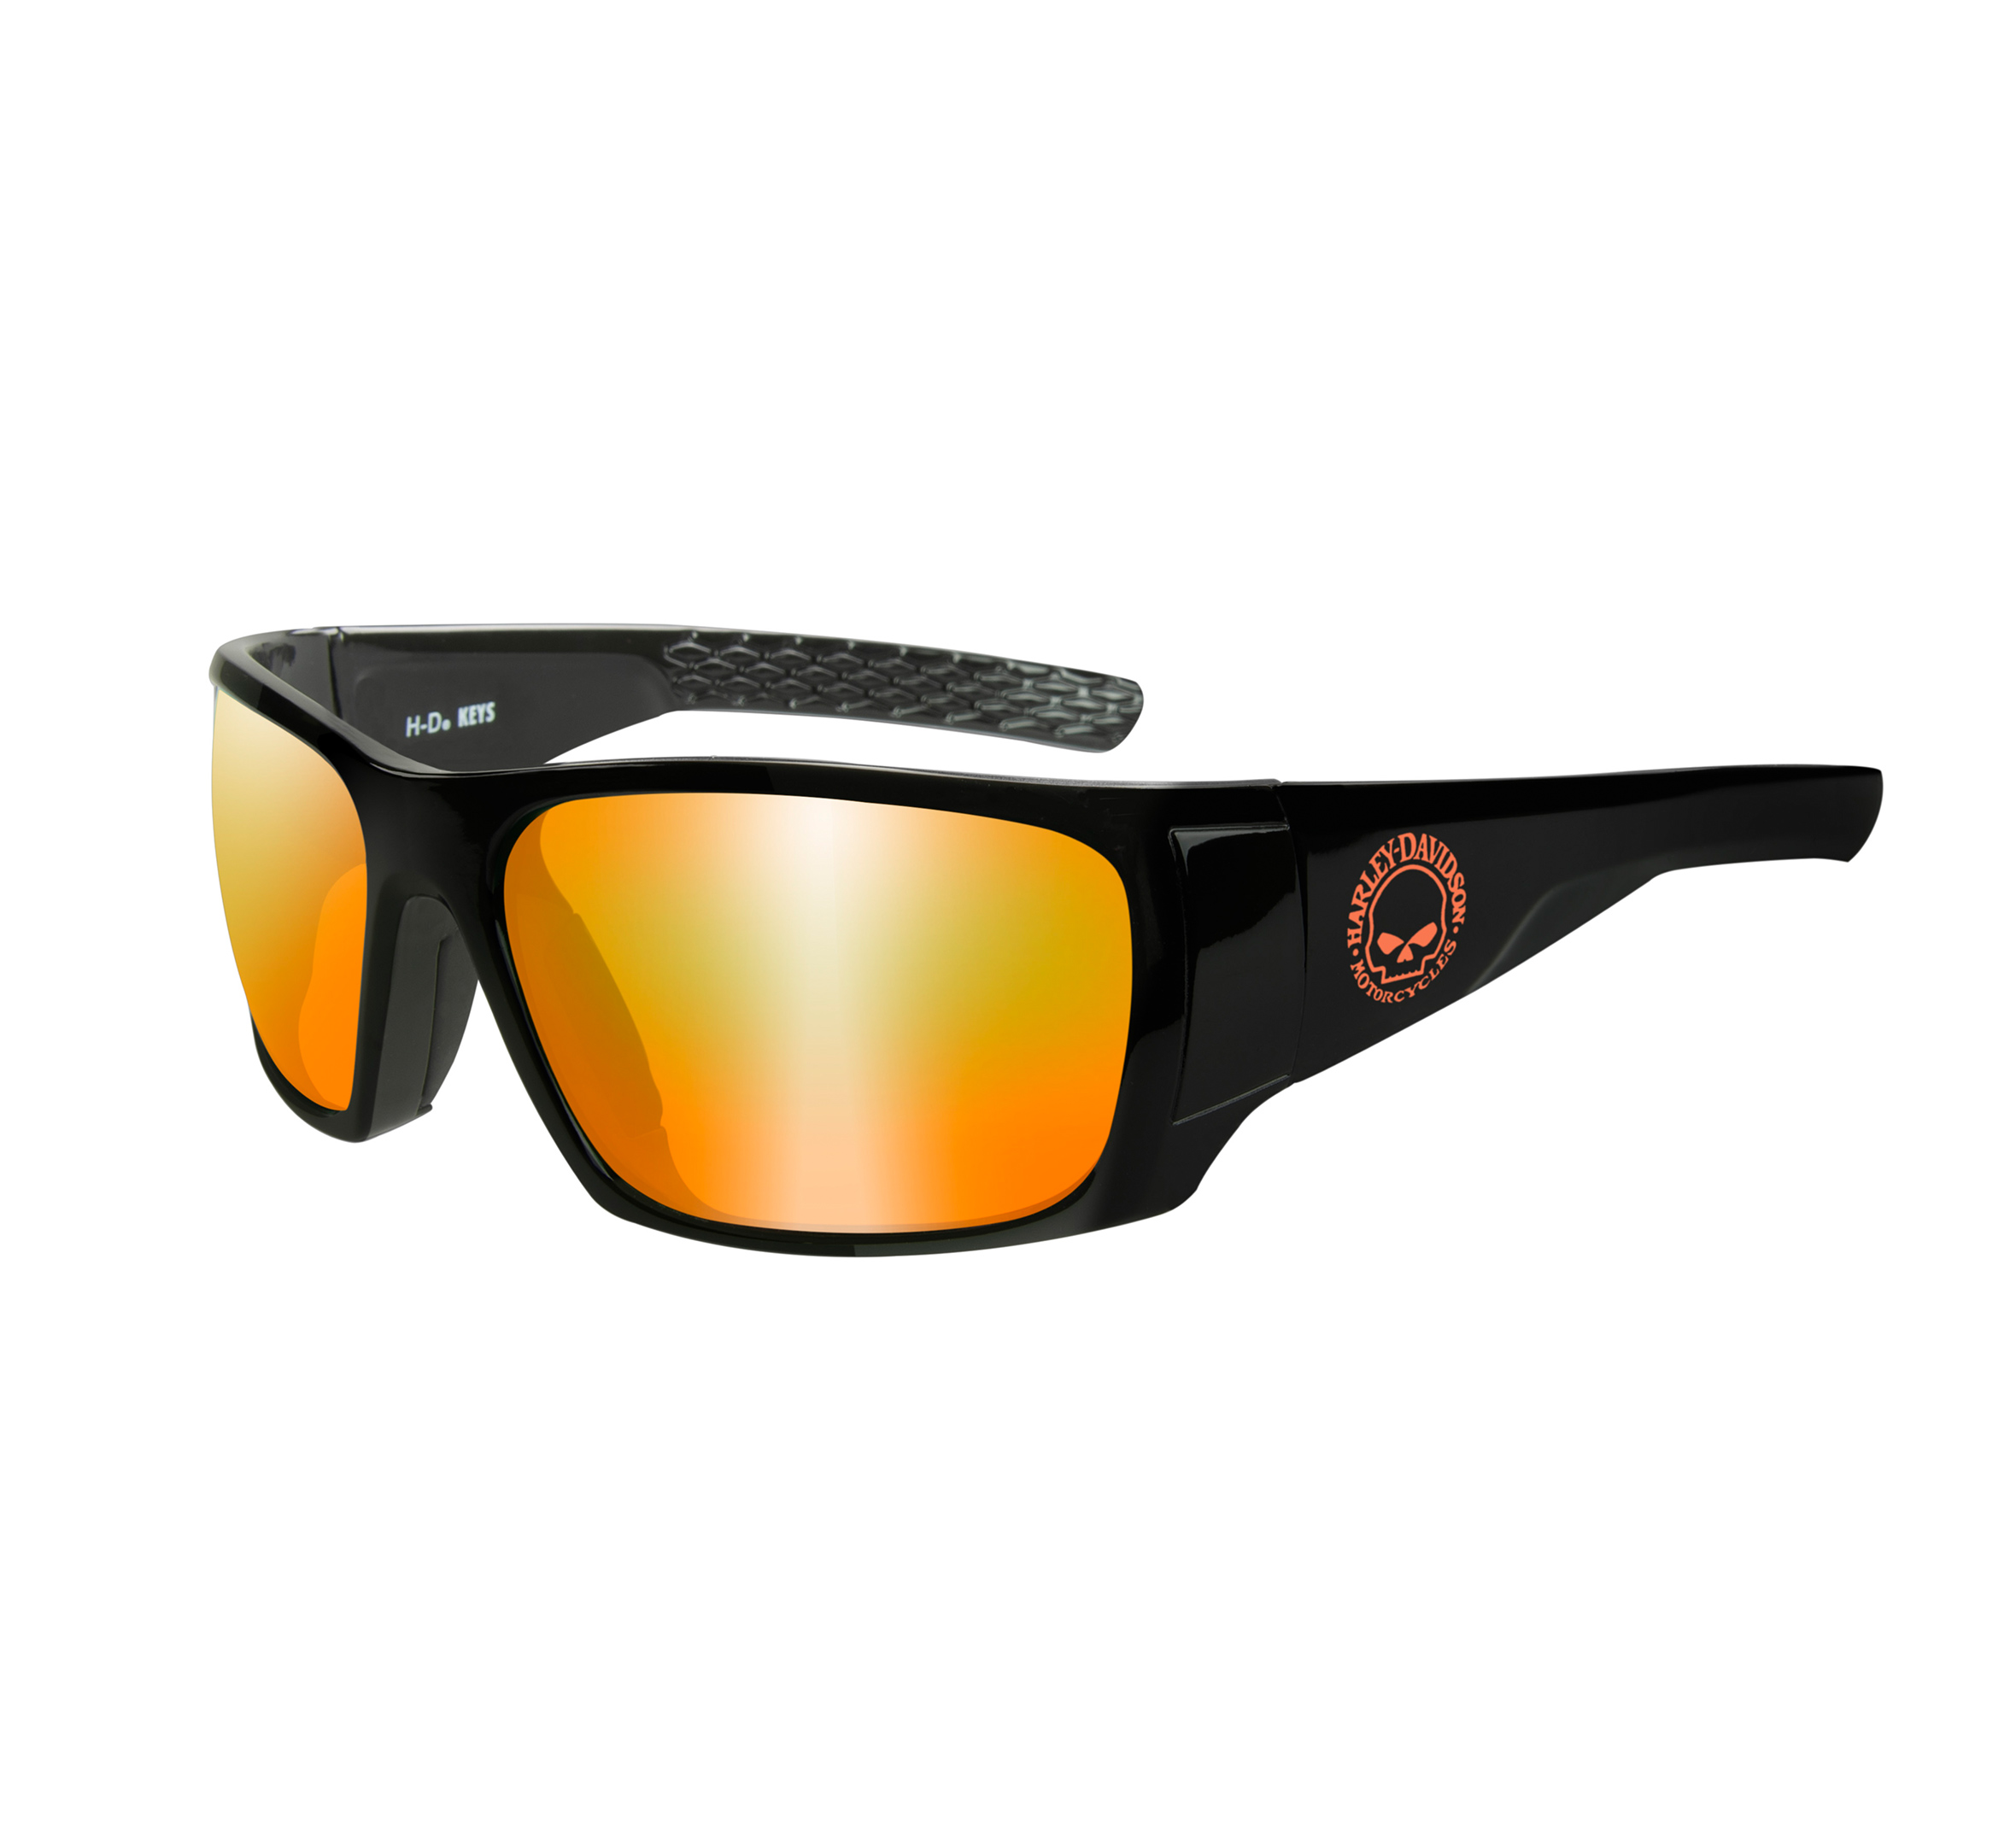 Eyewear-Driving-Pilote-glasse Harley Davidson-Vert-Homme-Lunettes de soleil-Outdoor-Sports-Fashion 